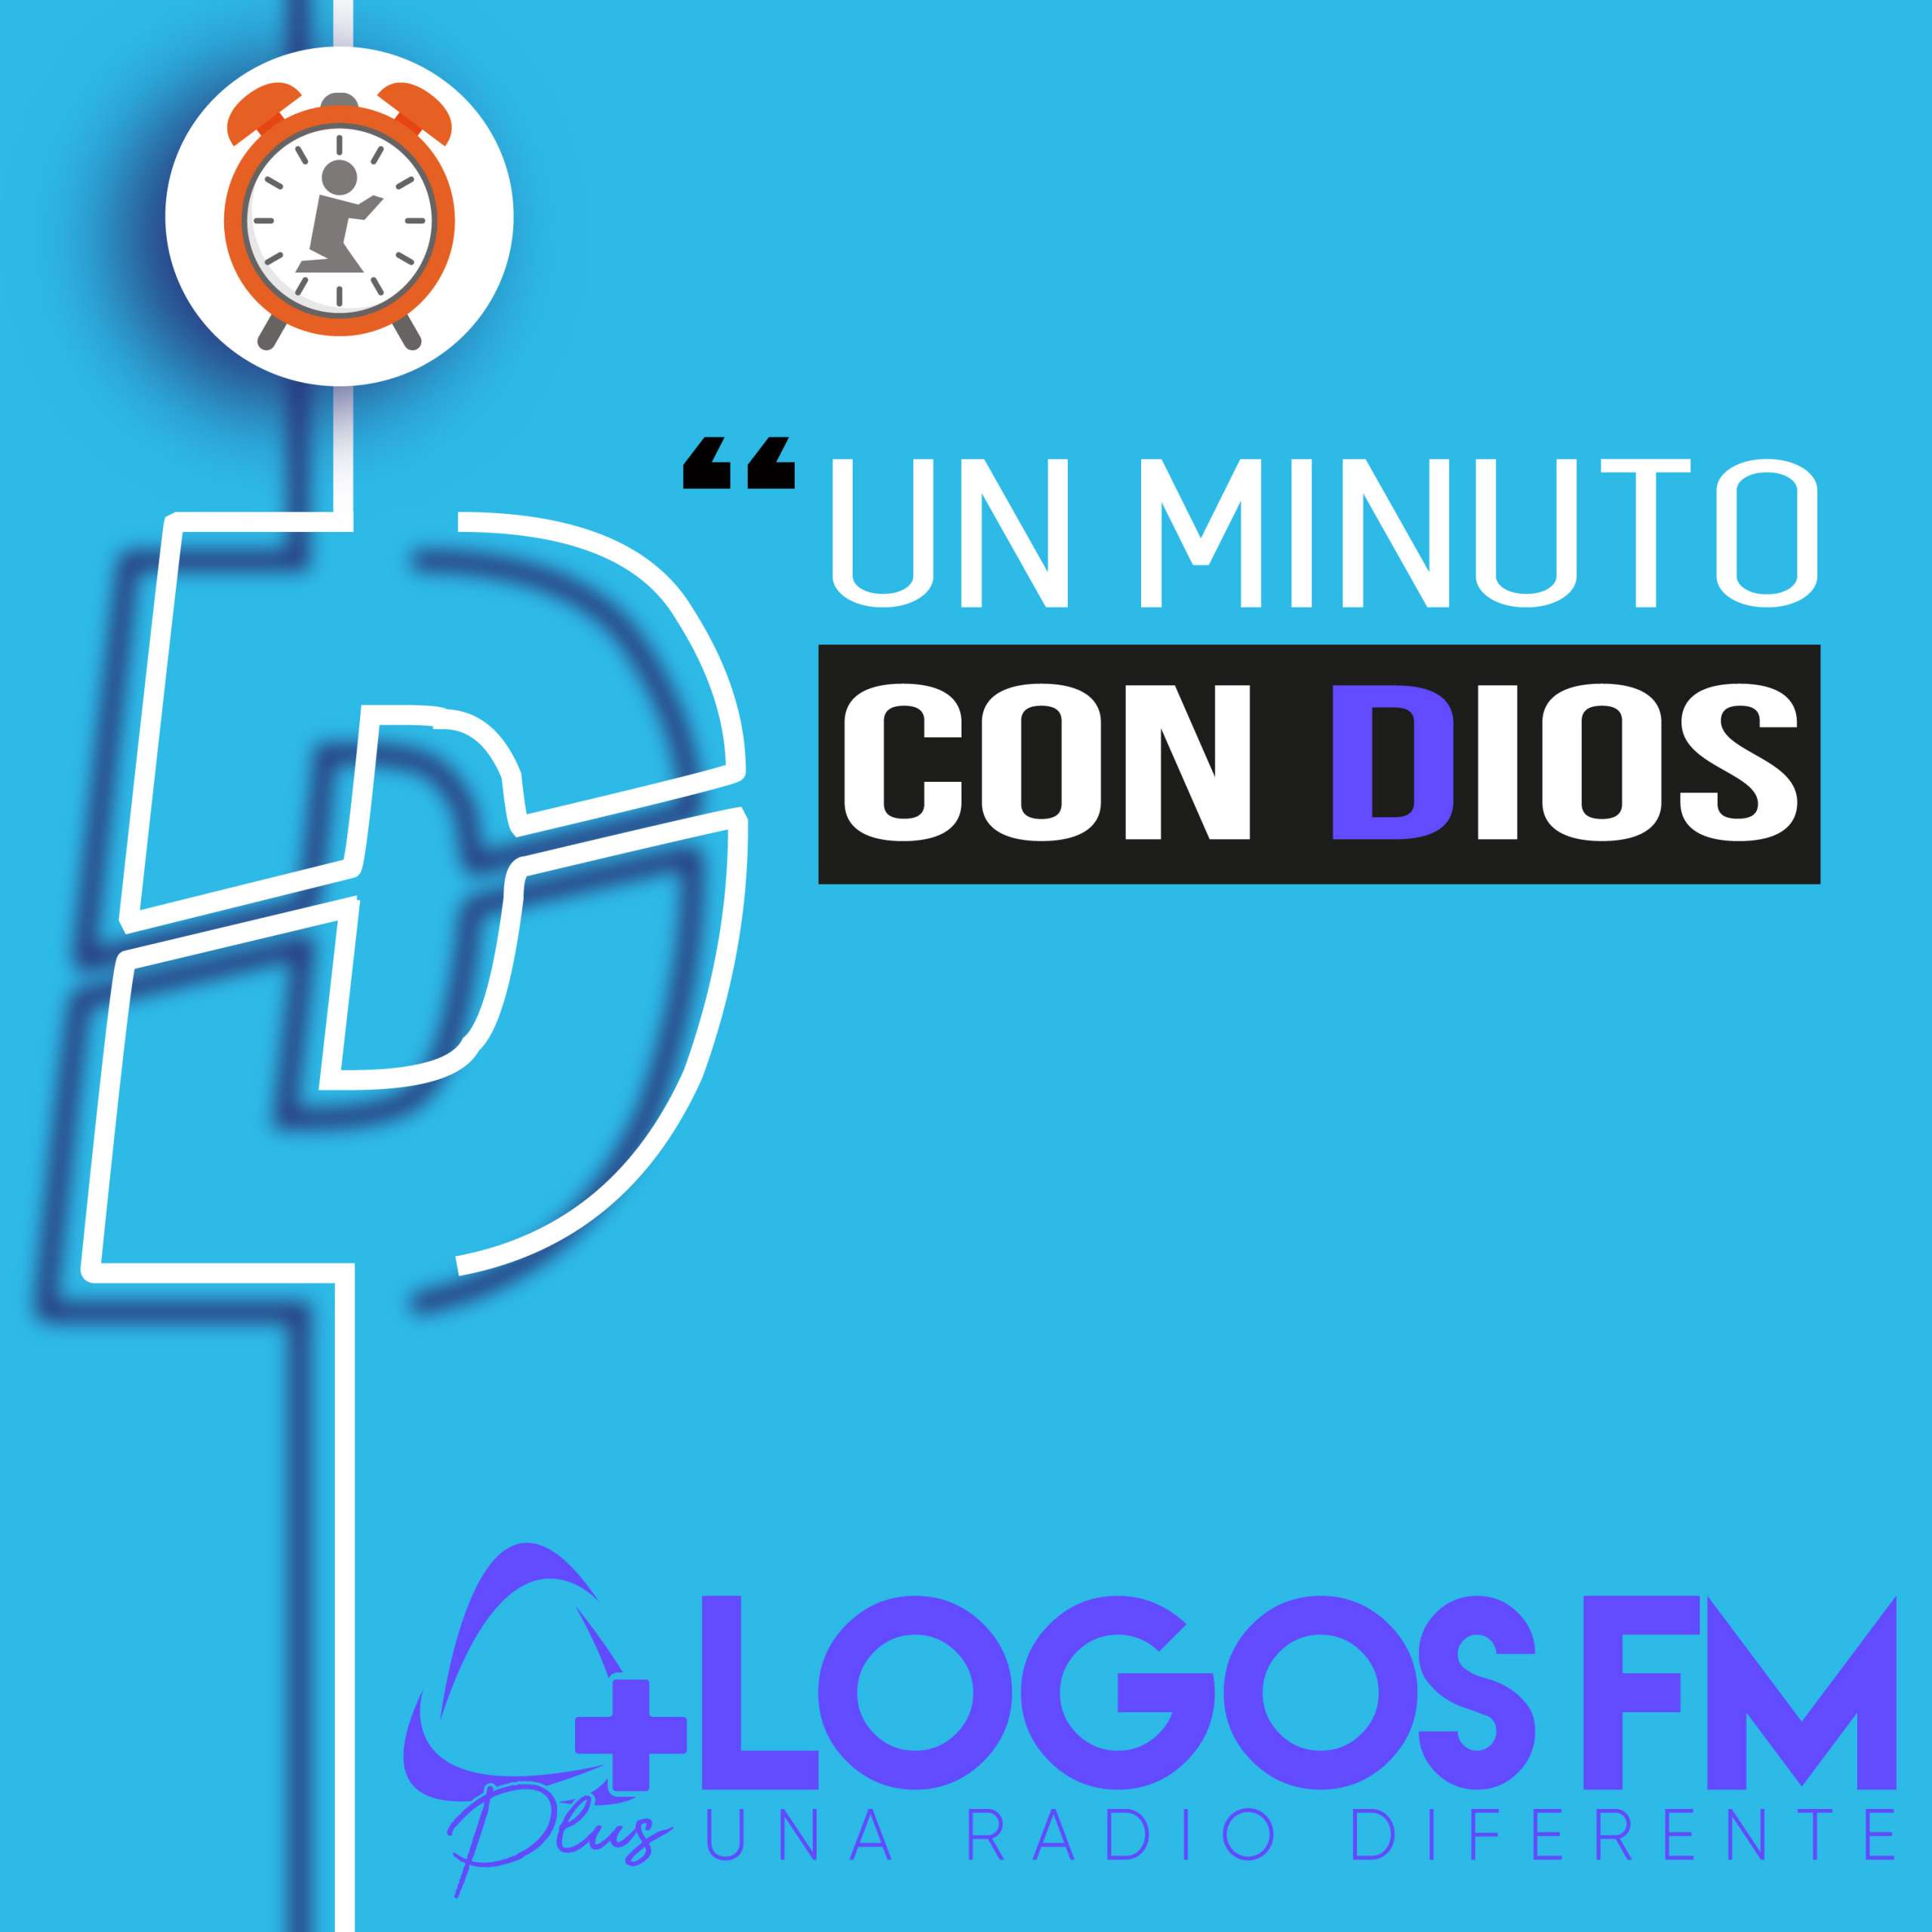 Un minuto con Dios - Episodio 453 - Loida Vargas